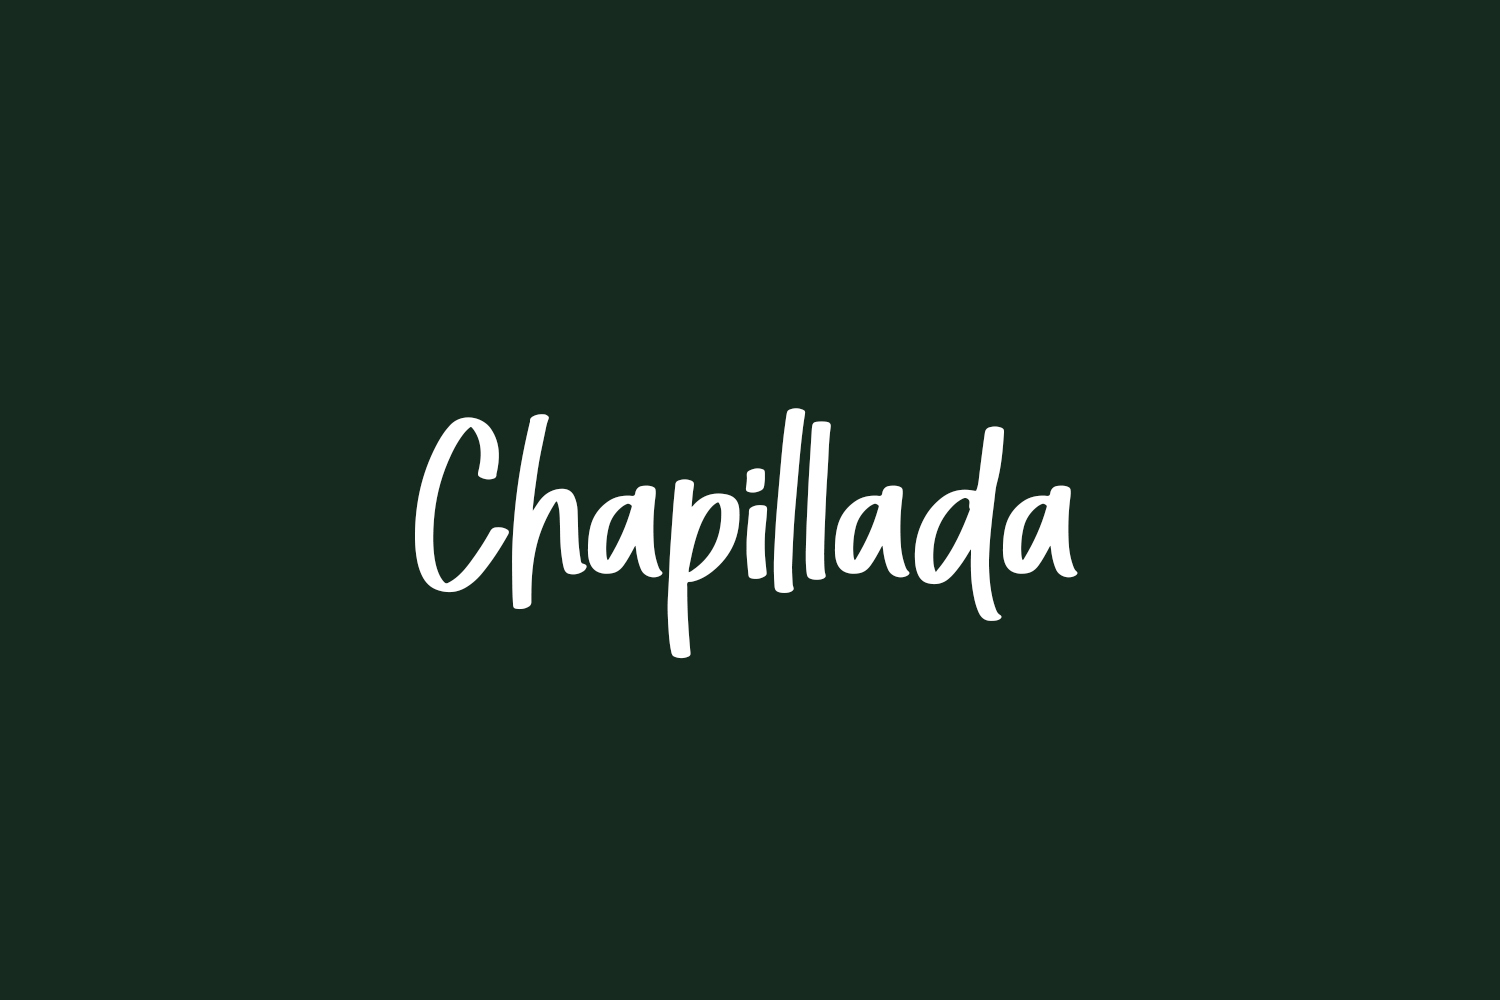 Chapillada